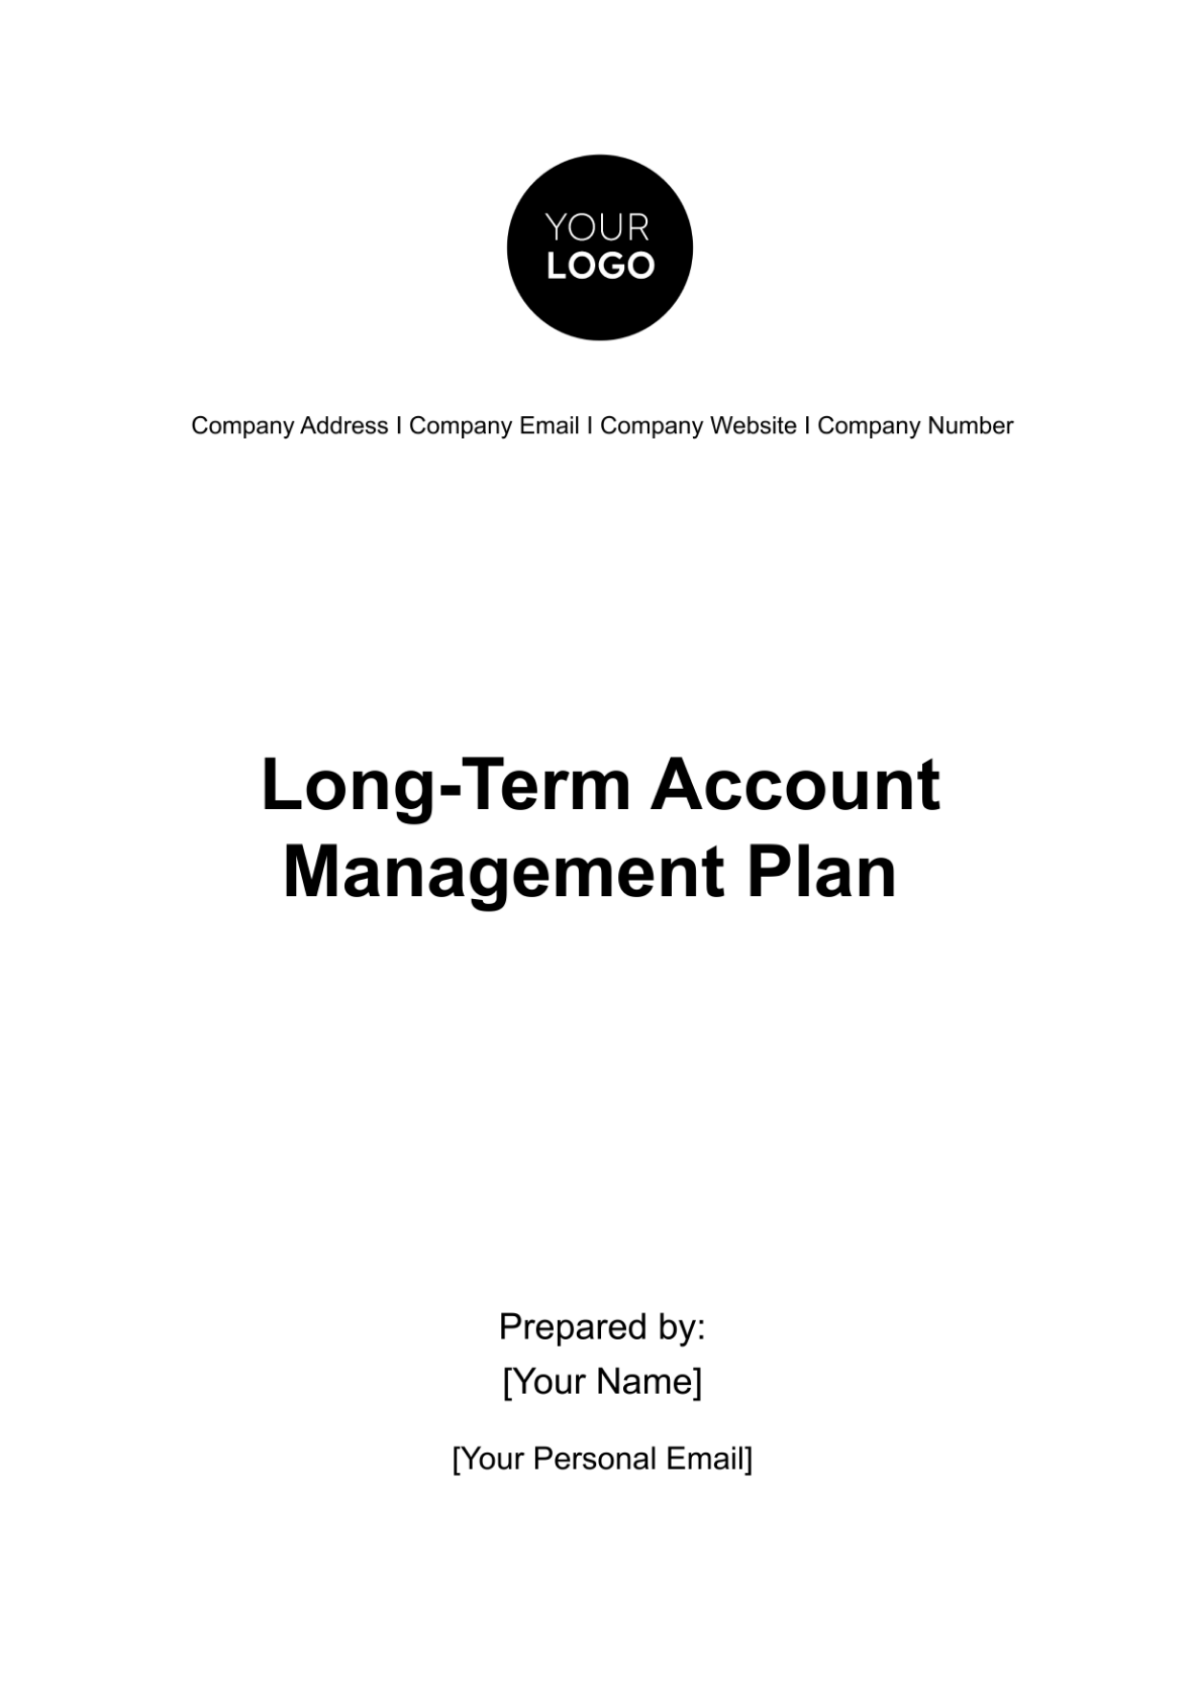 Long-Term Account Management Plan Template